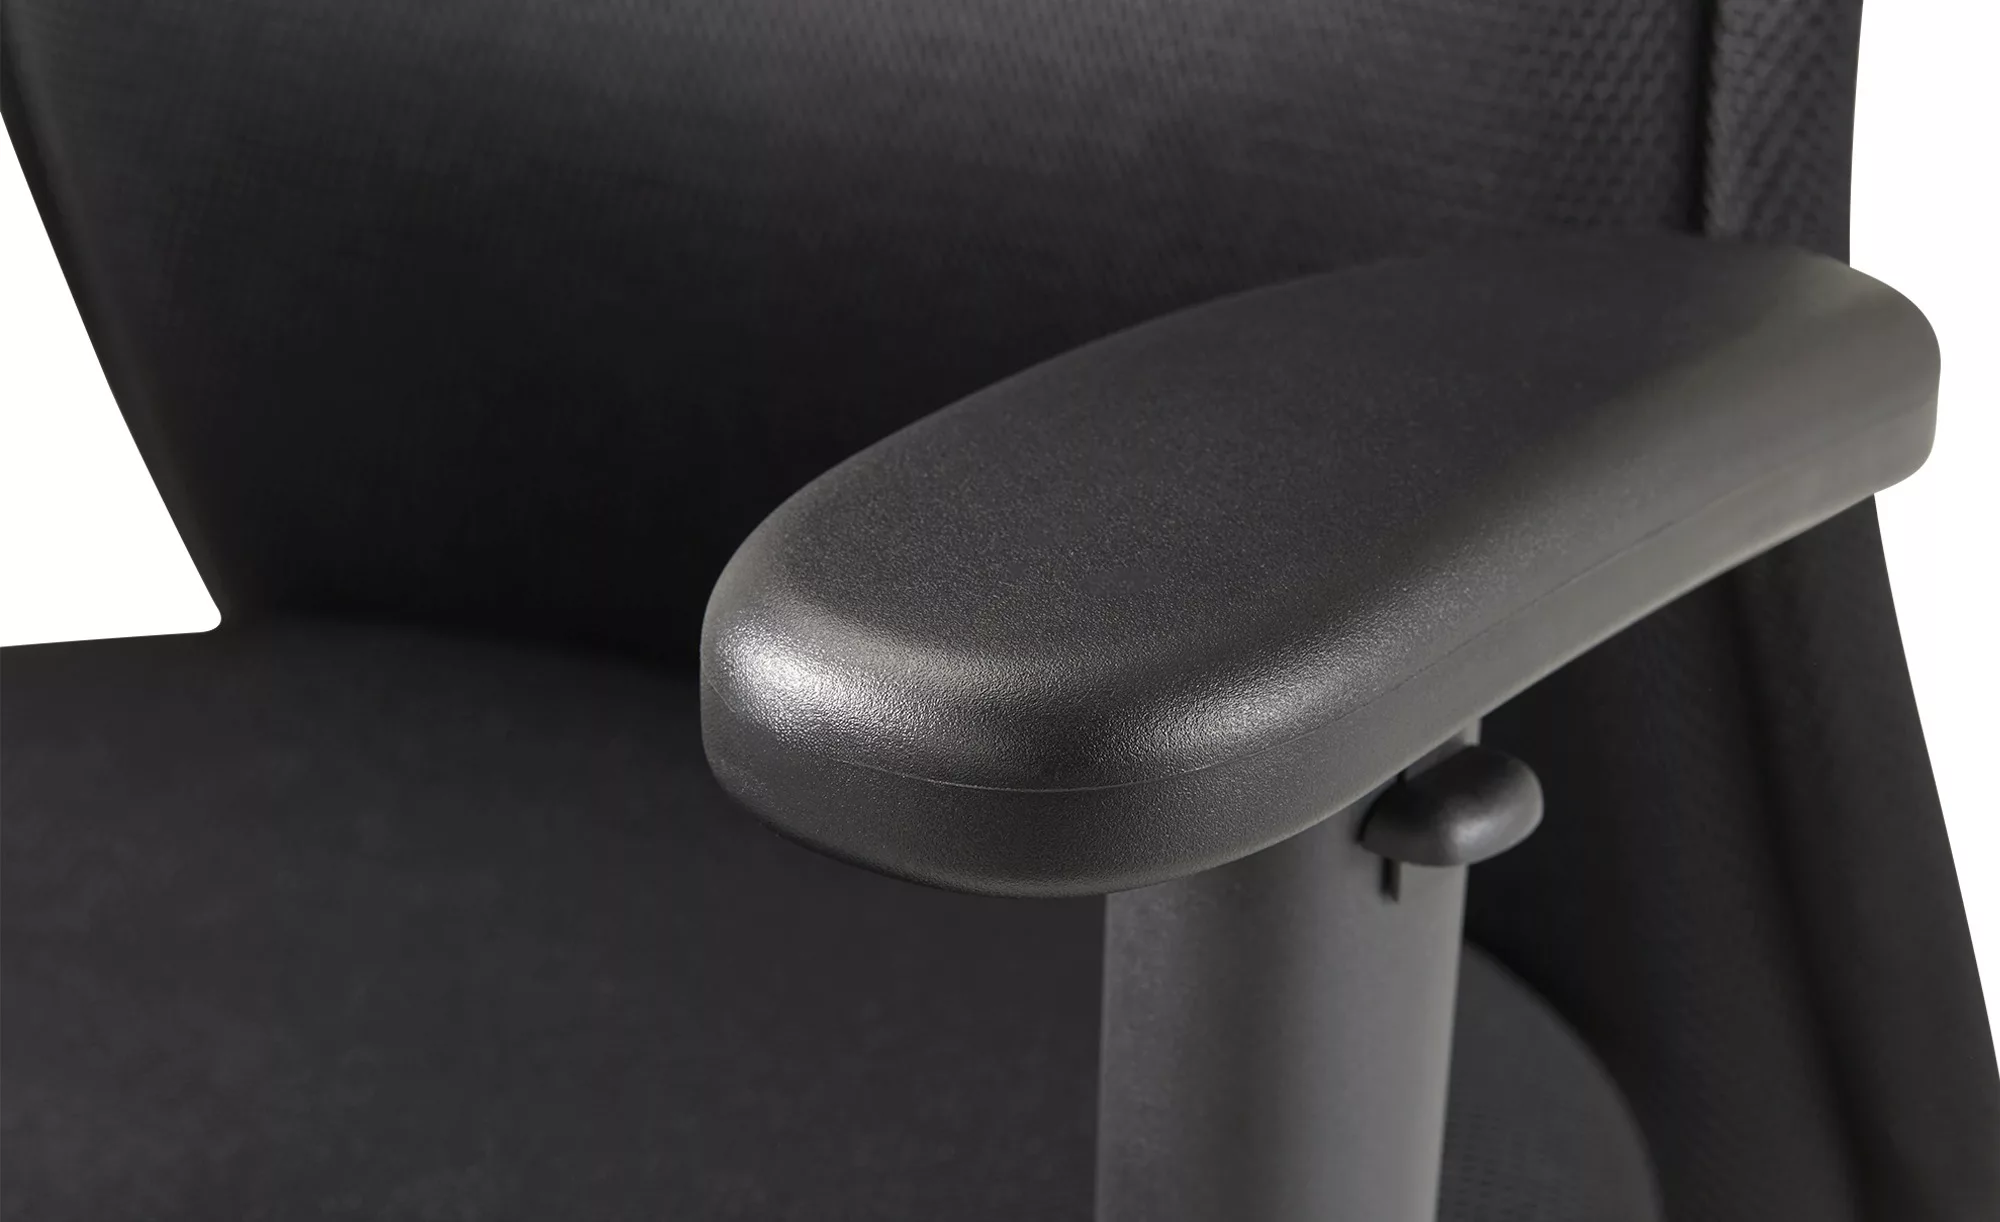 Bürostuhl mit Armlehnen  Spree neu Stühle > Bürostühle - Höffner günstig online kaufen